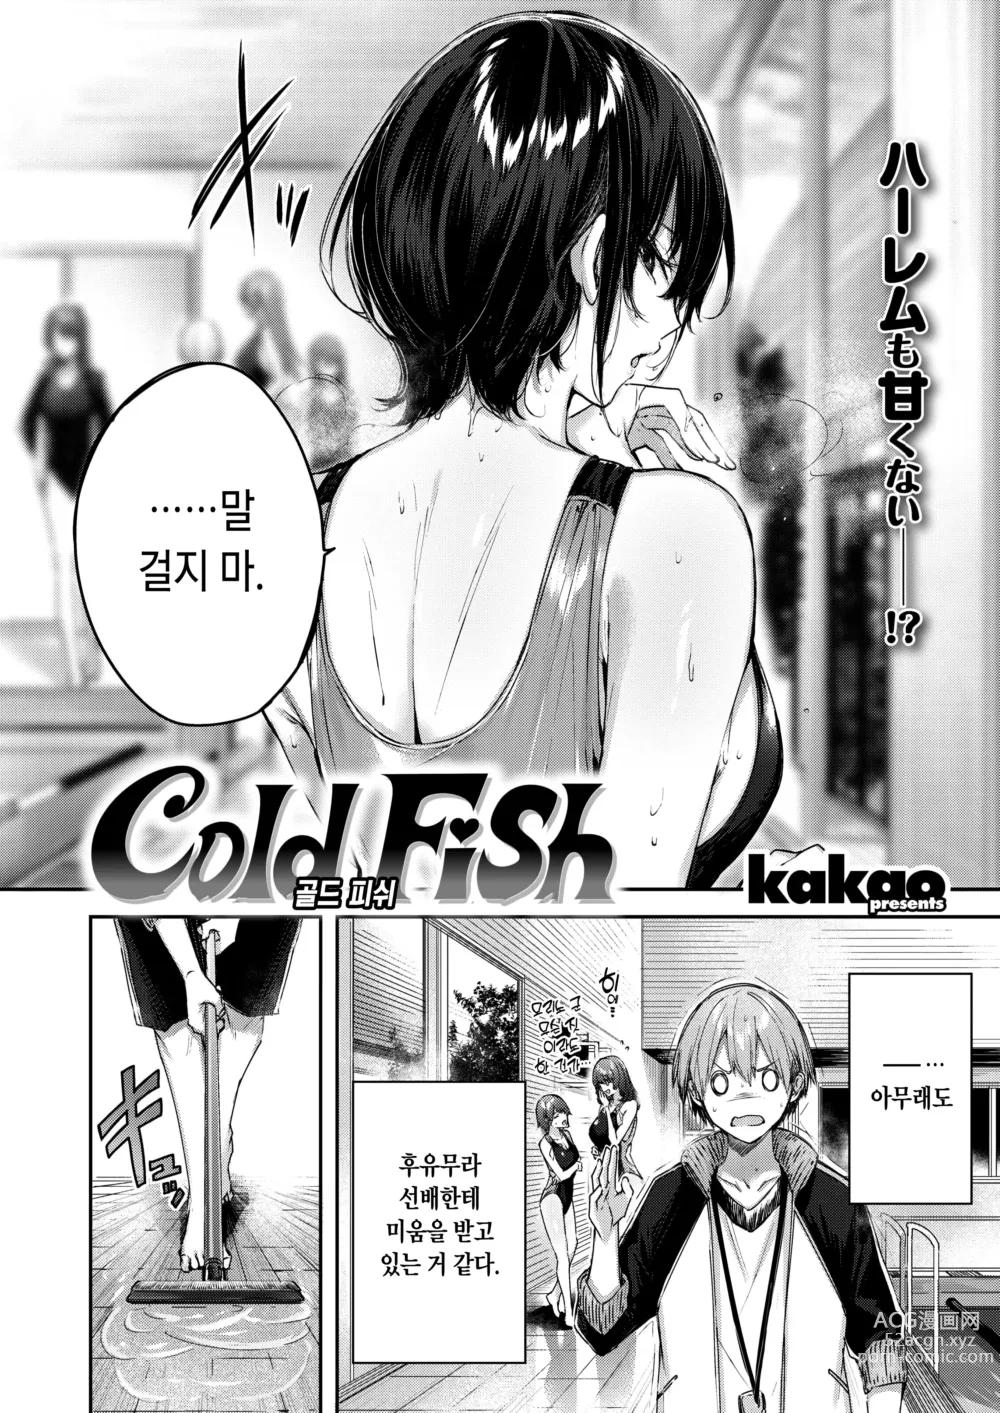 Page 3 of manga Cold Fish